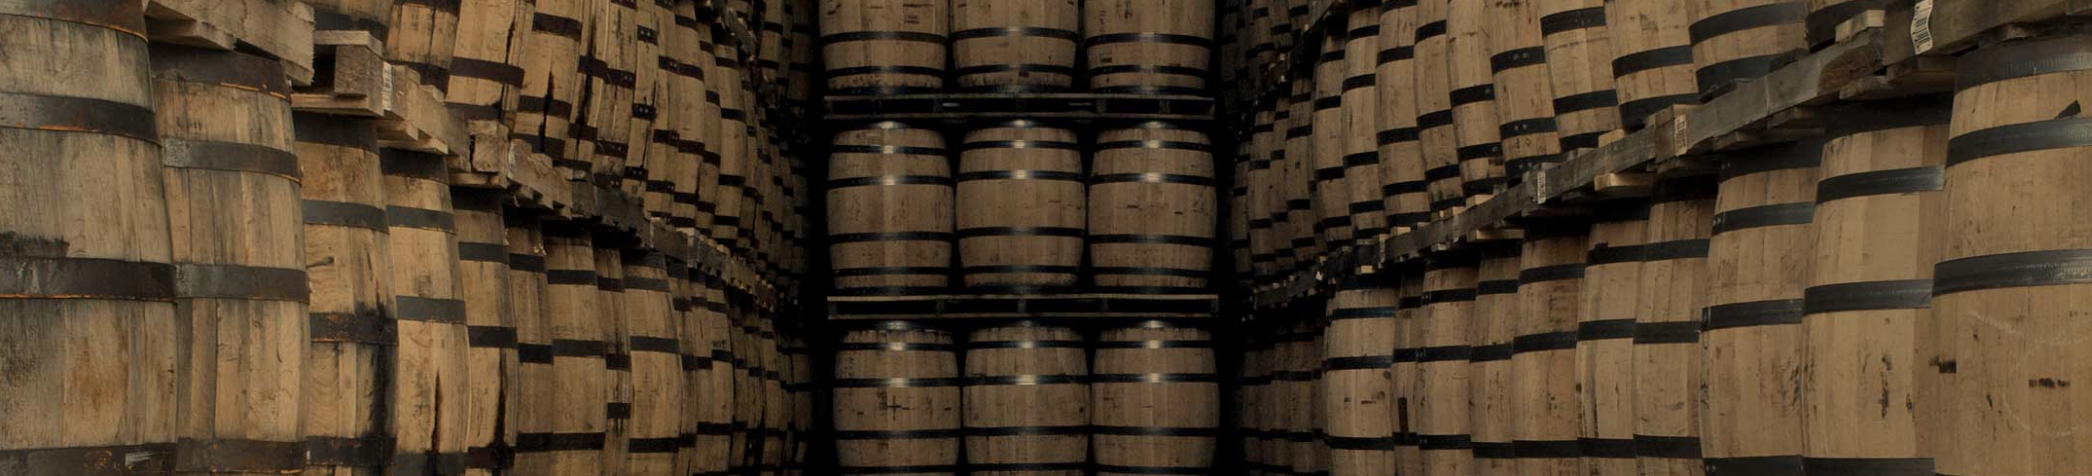 Barrels of Crown Royal Whisky